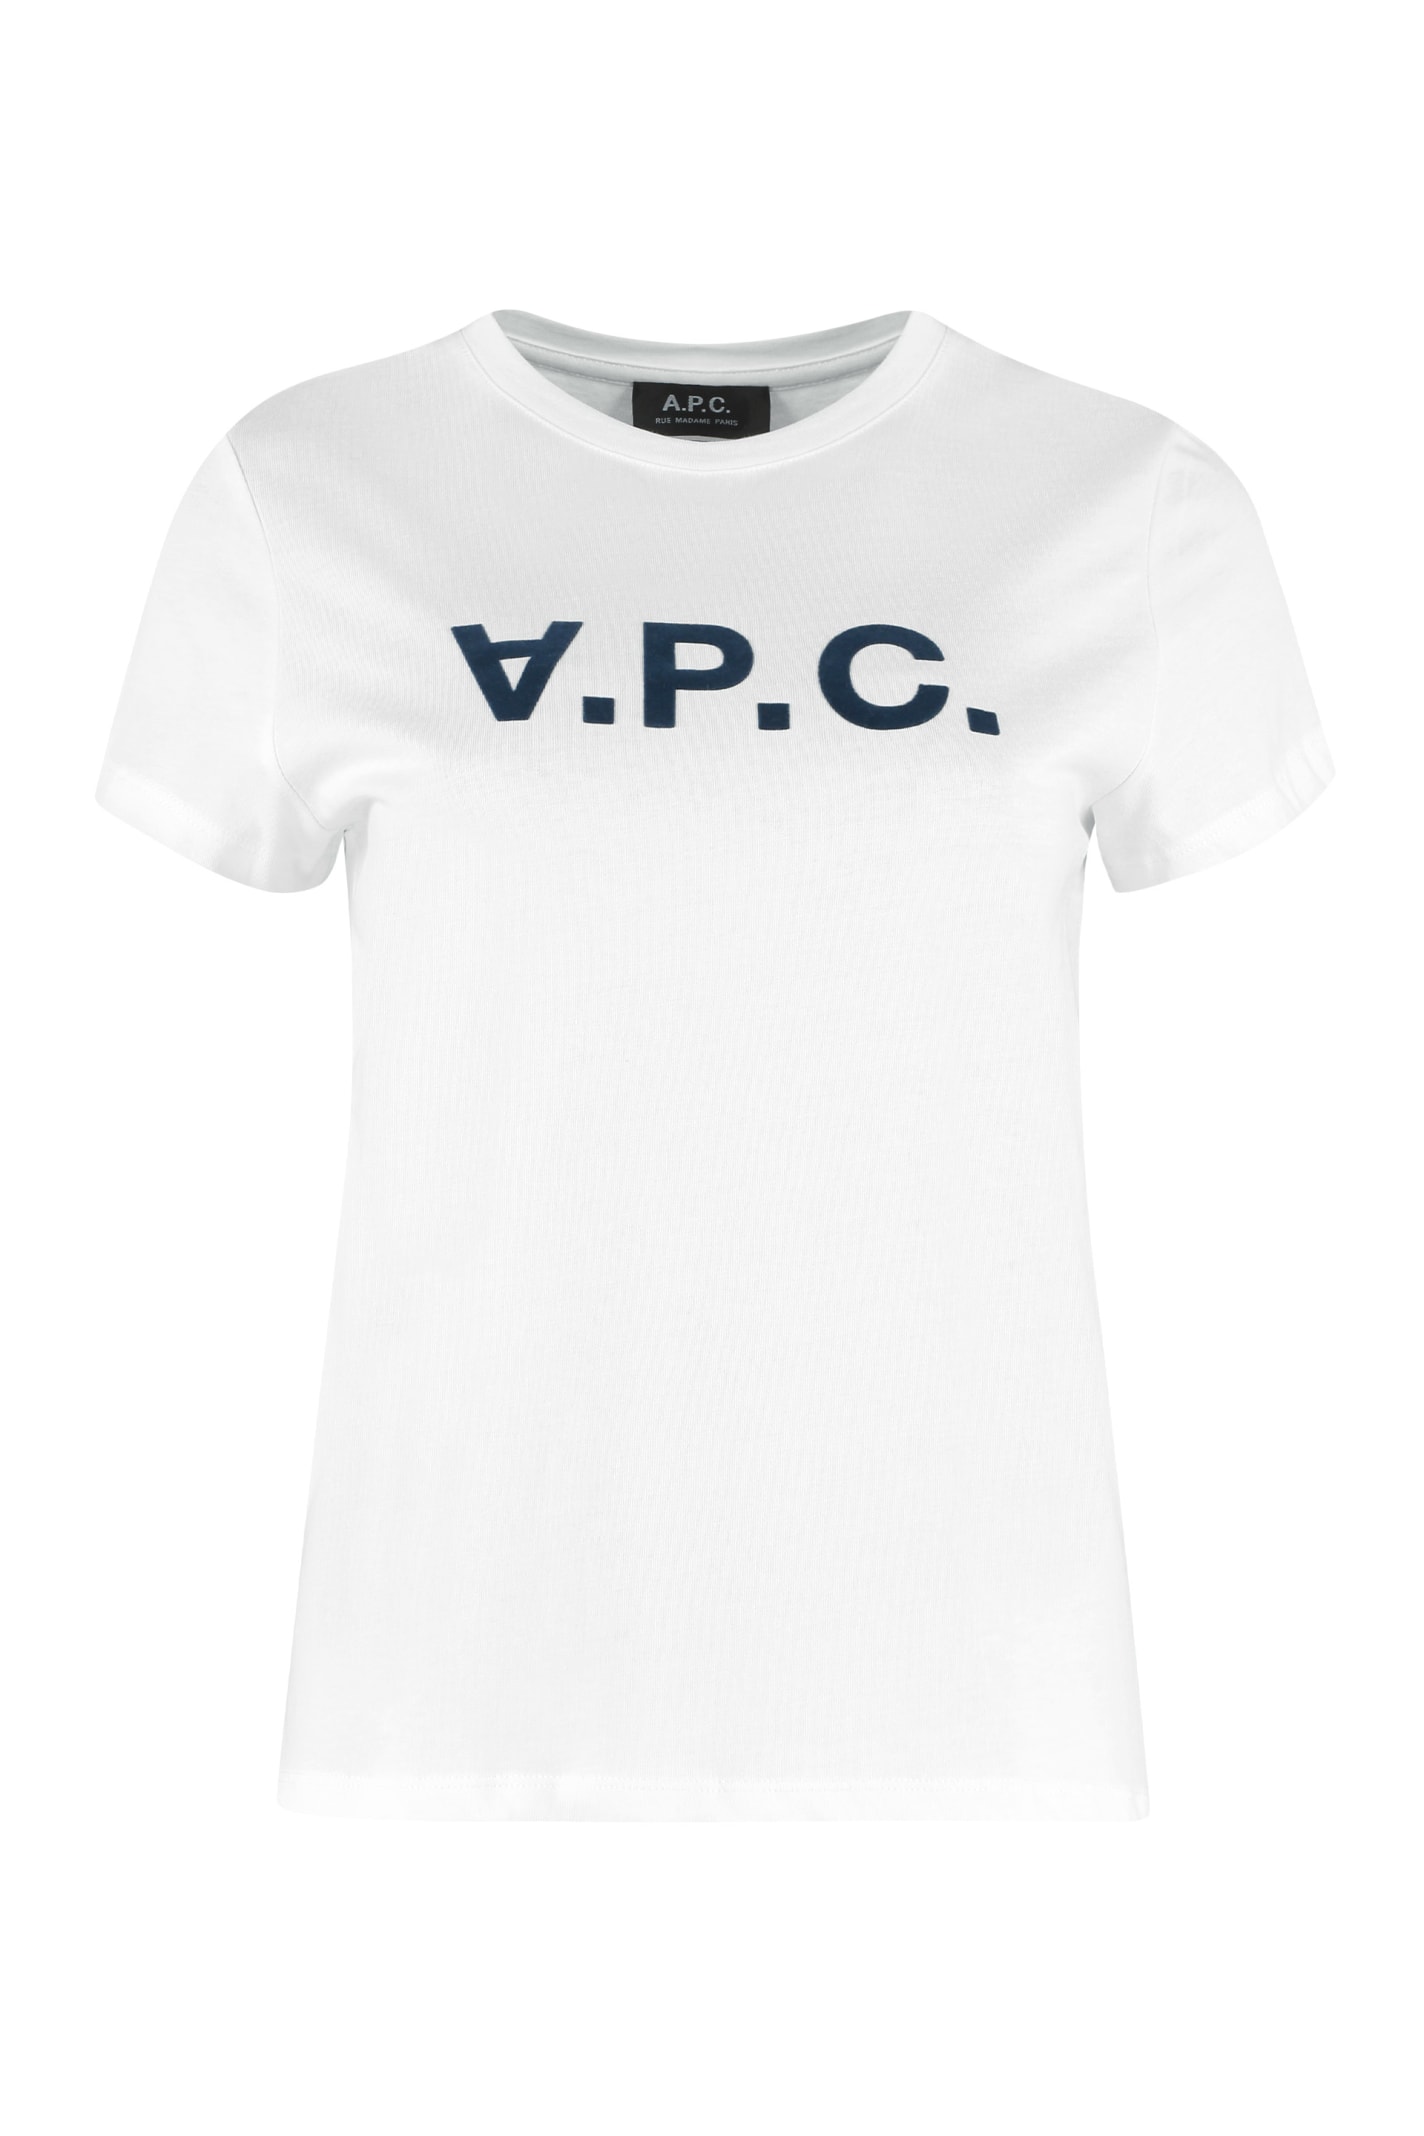 A.P.C.A.P.C. Vpc Cotton T-shirt | DailyMail